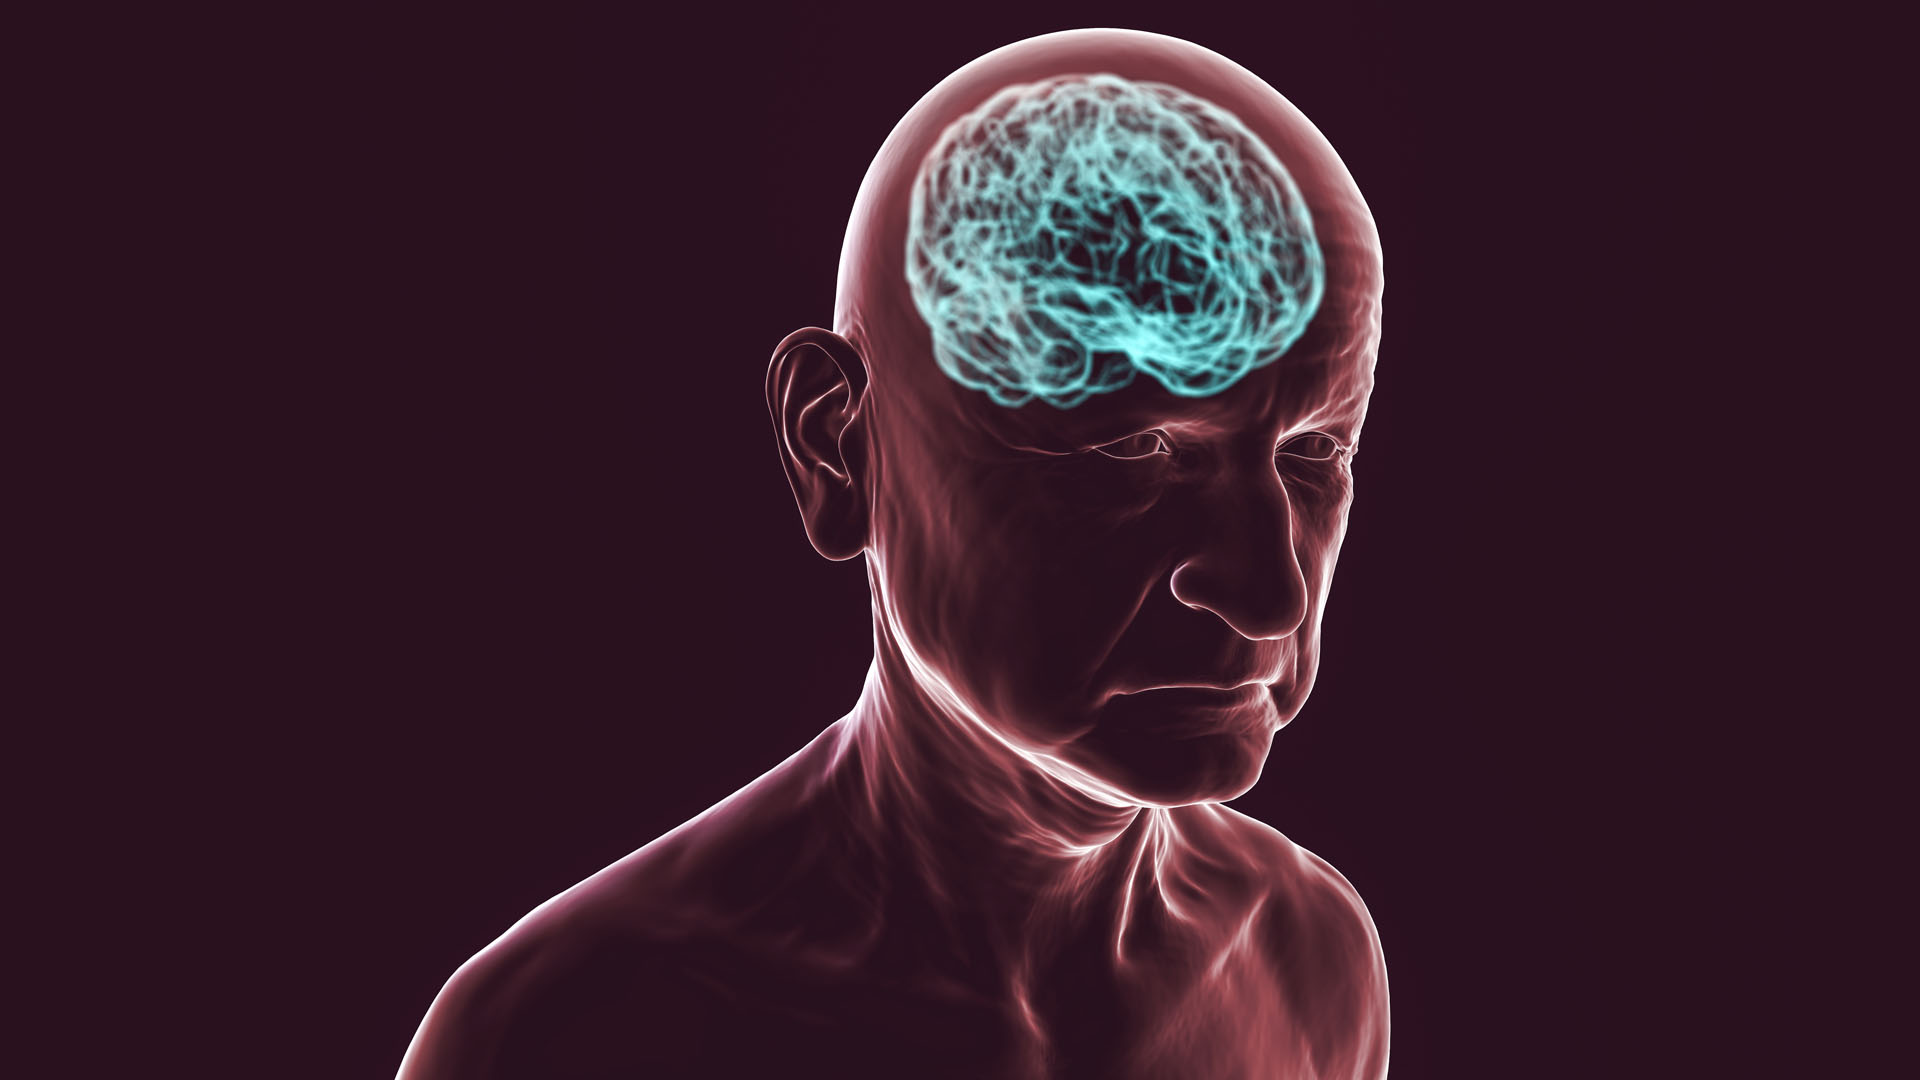 Assessing Brain Activity to Predict Dementia Risk